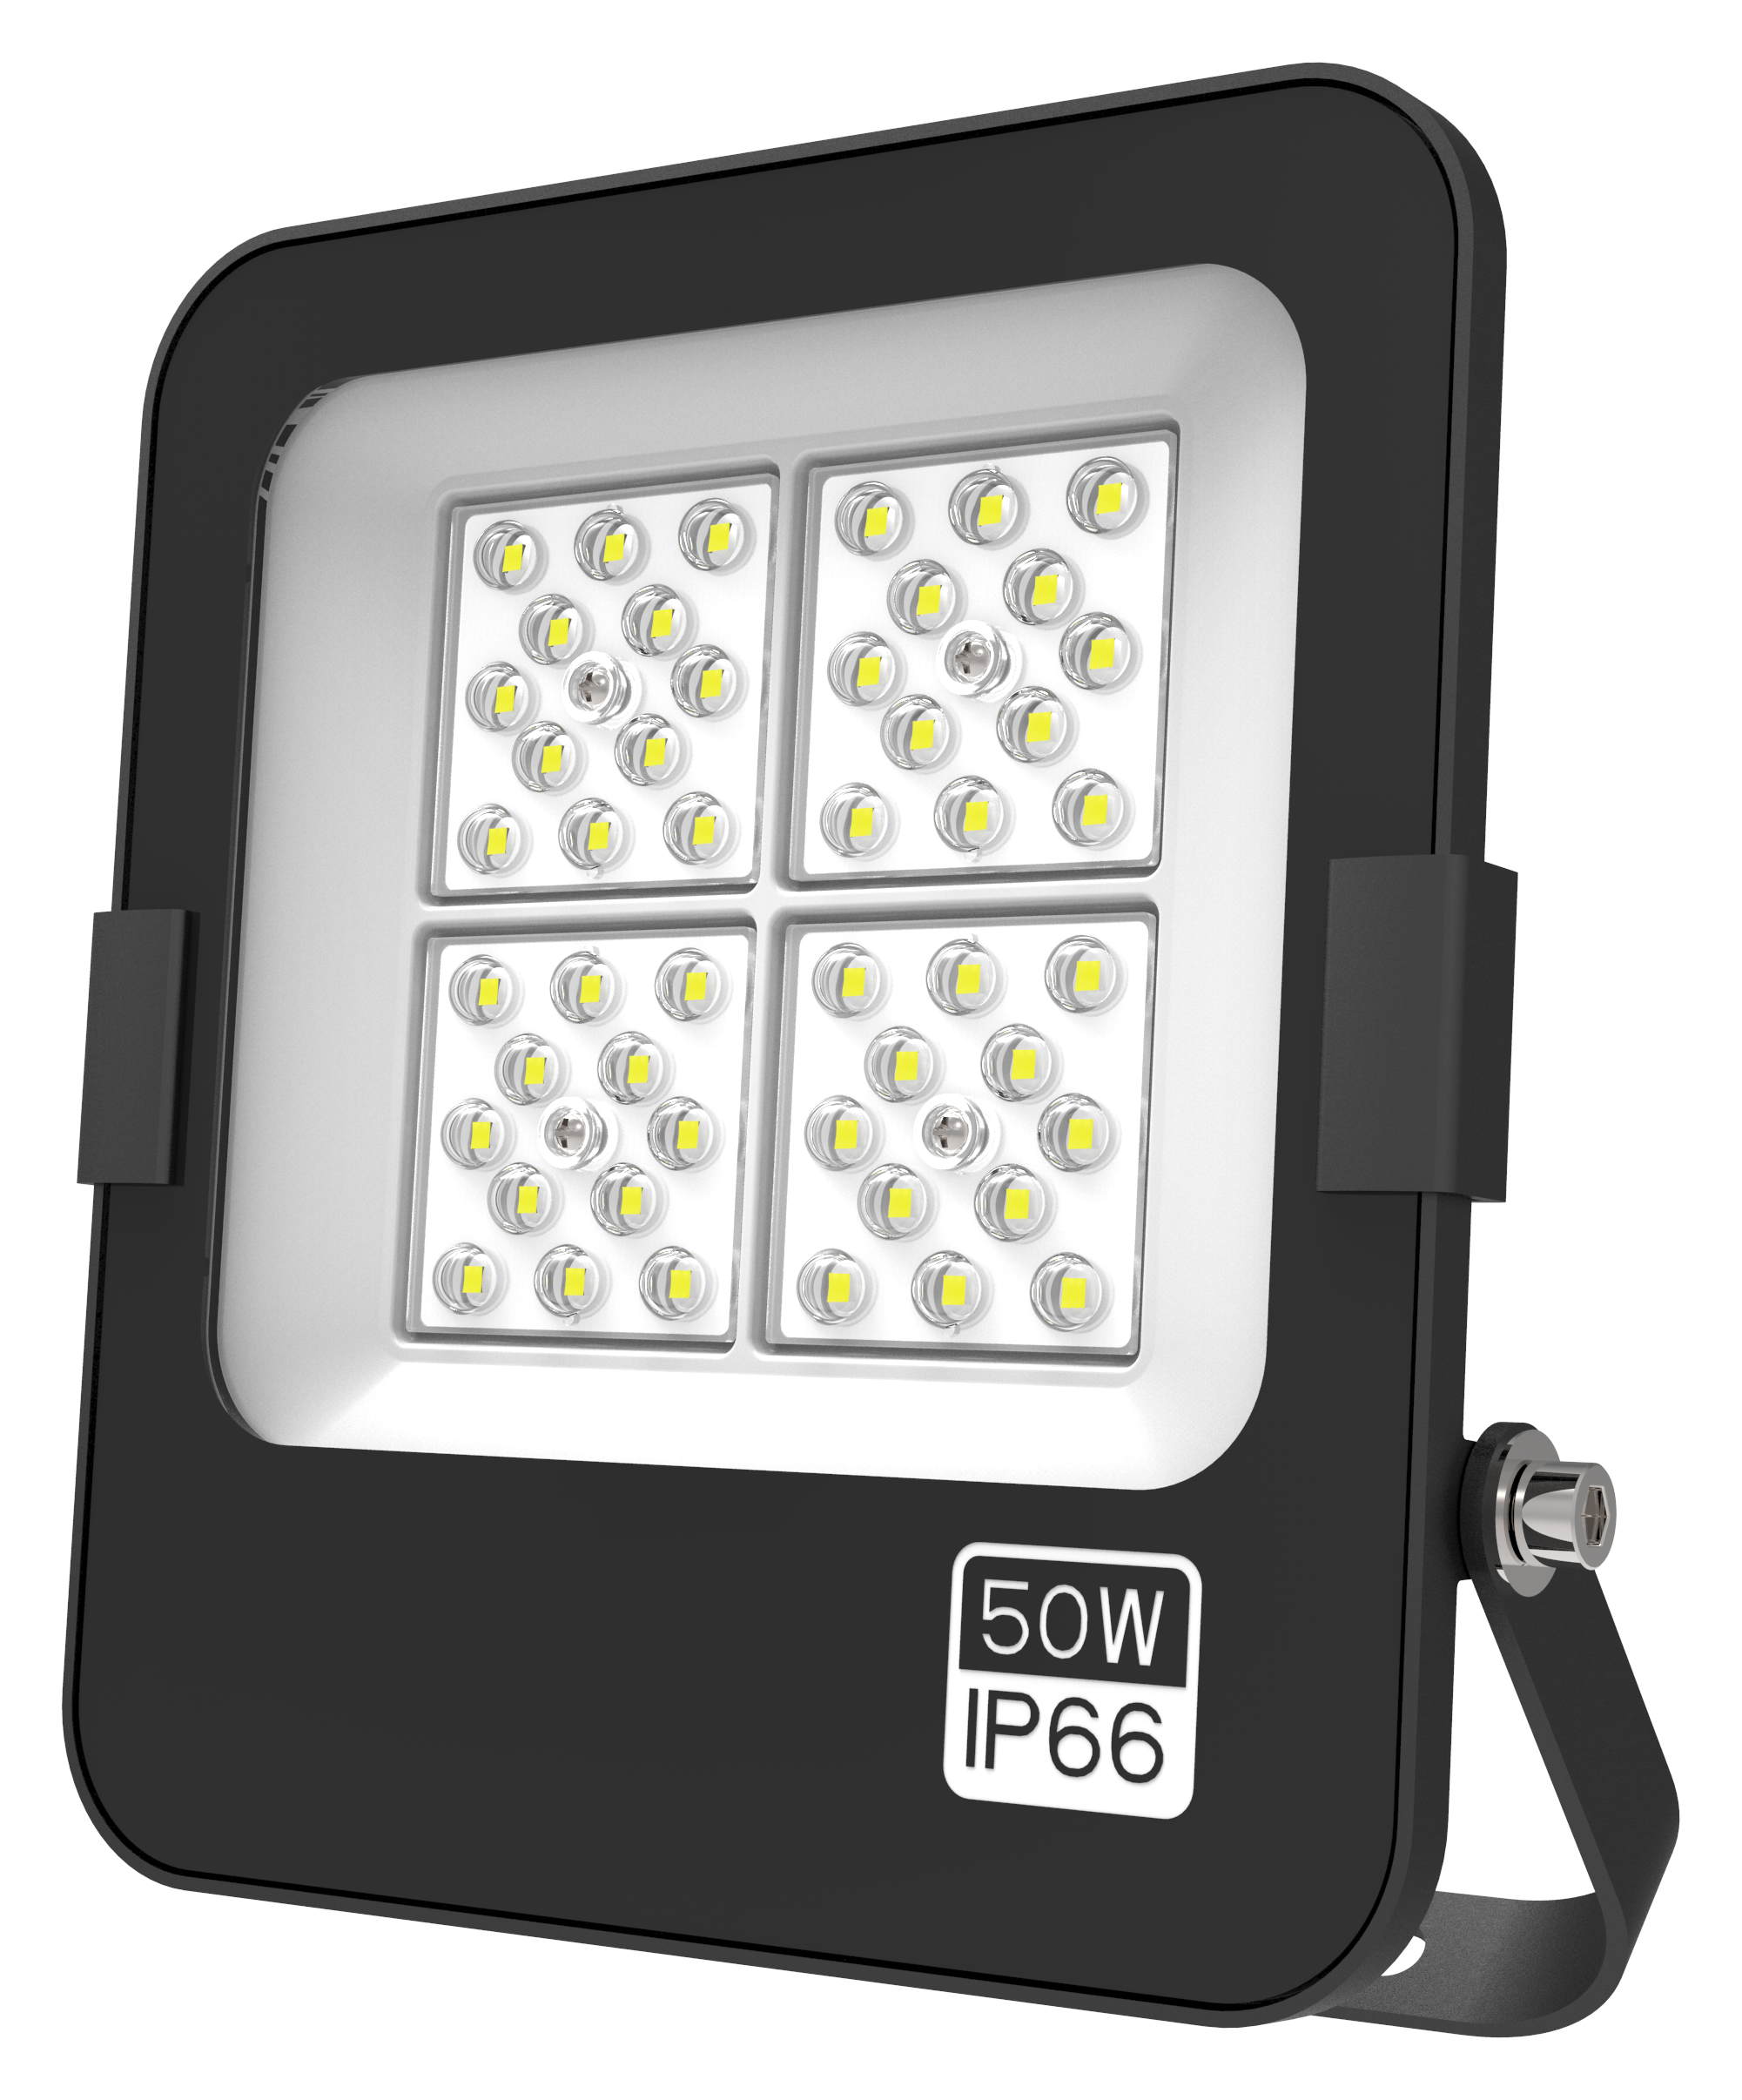 LED Flood Light 50W 100-240V 50 60Hz PF0.9 Ra80 SDCM6 Efficacy105Lm W Beam Angle 90 Degree IP65